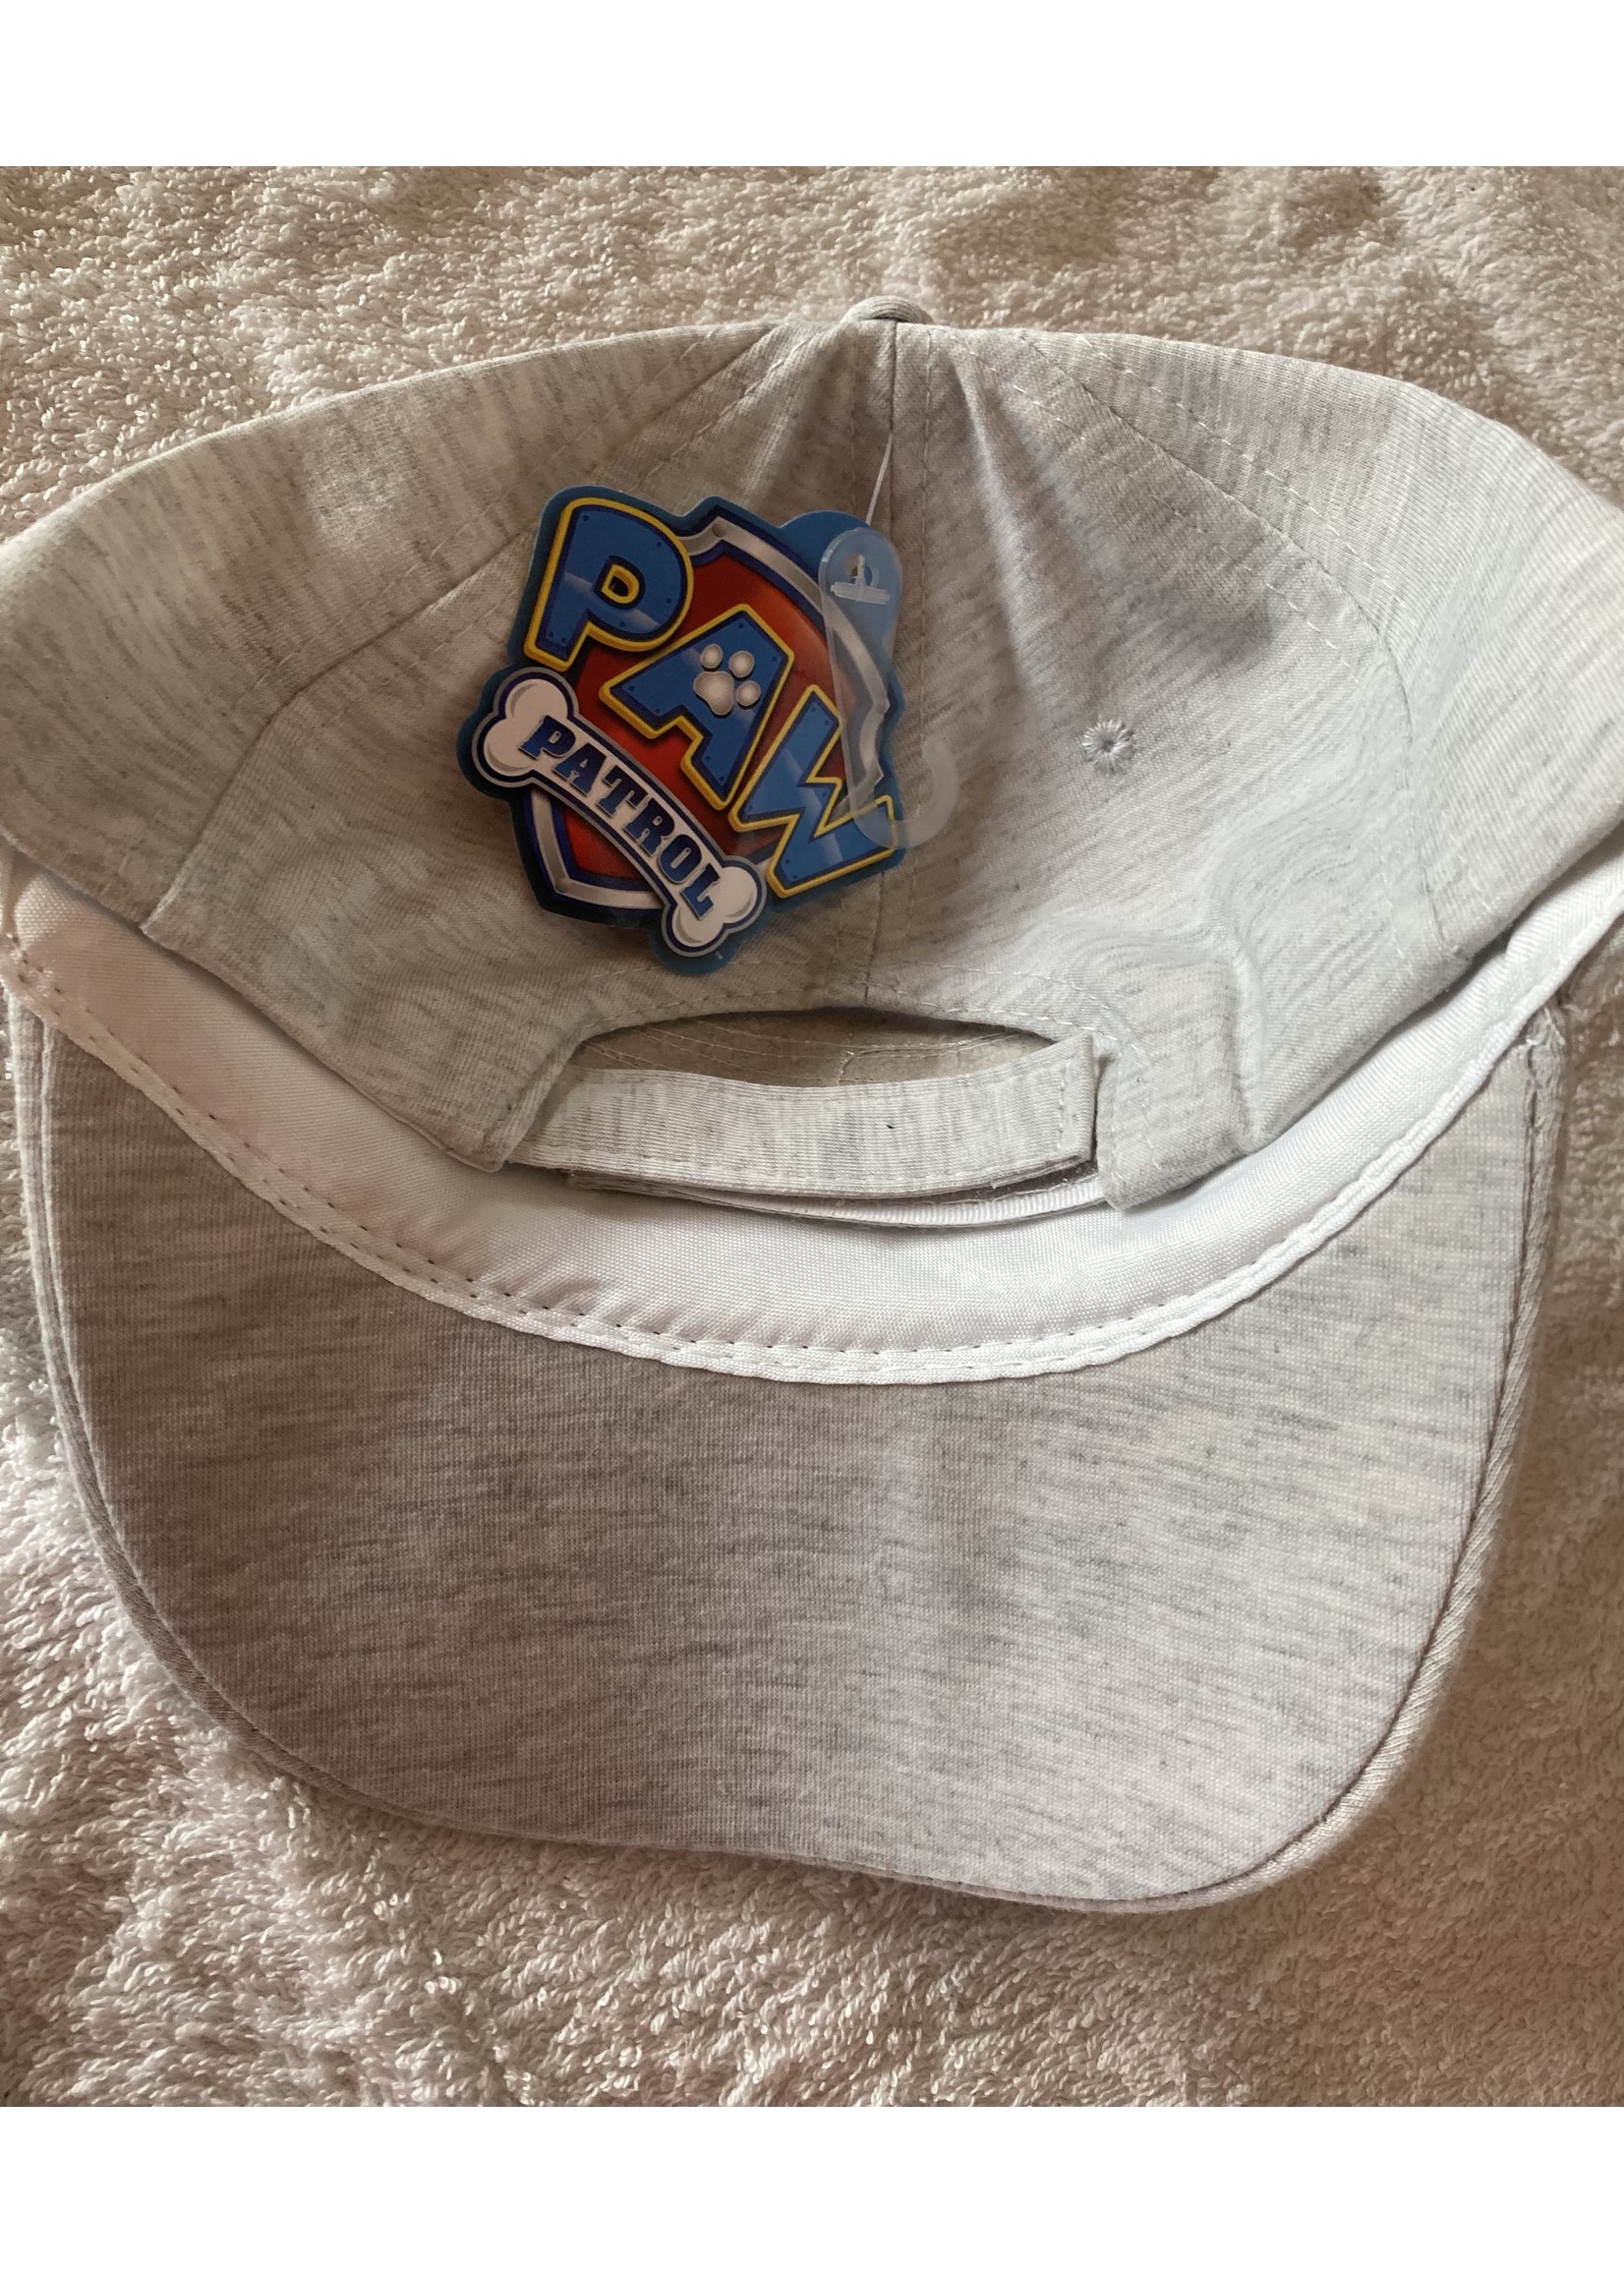 Nickelodeon Paw Patrol baseball cap from Nickelodeon gray